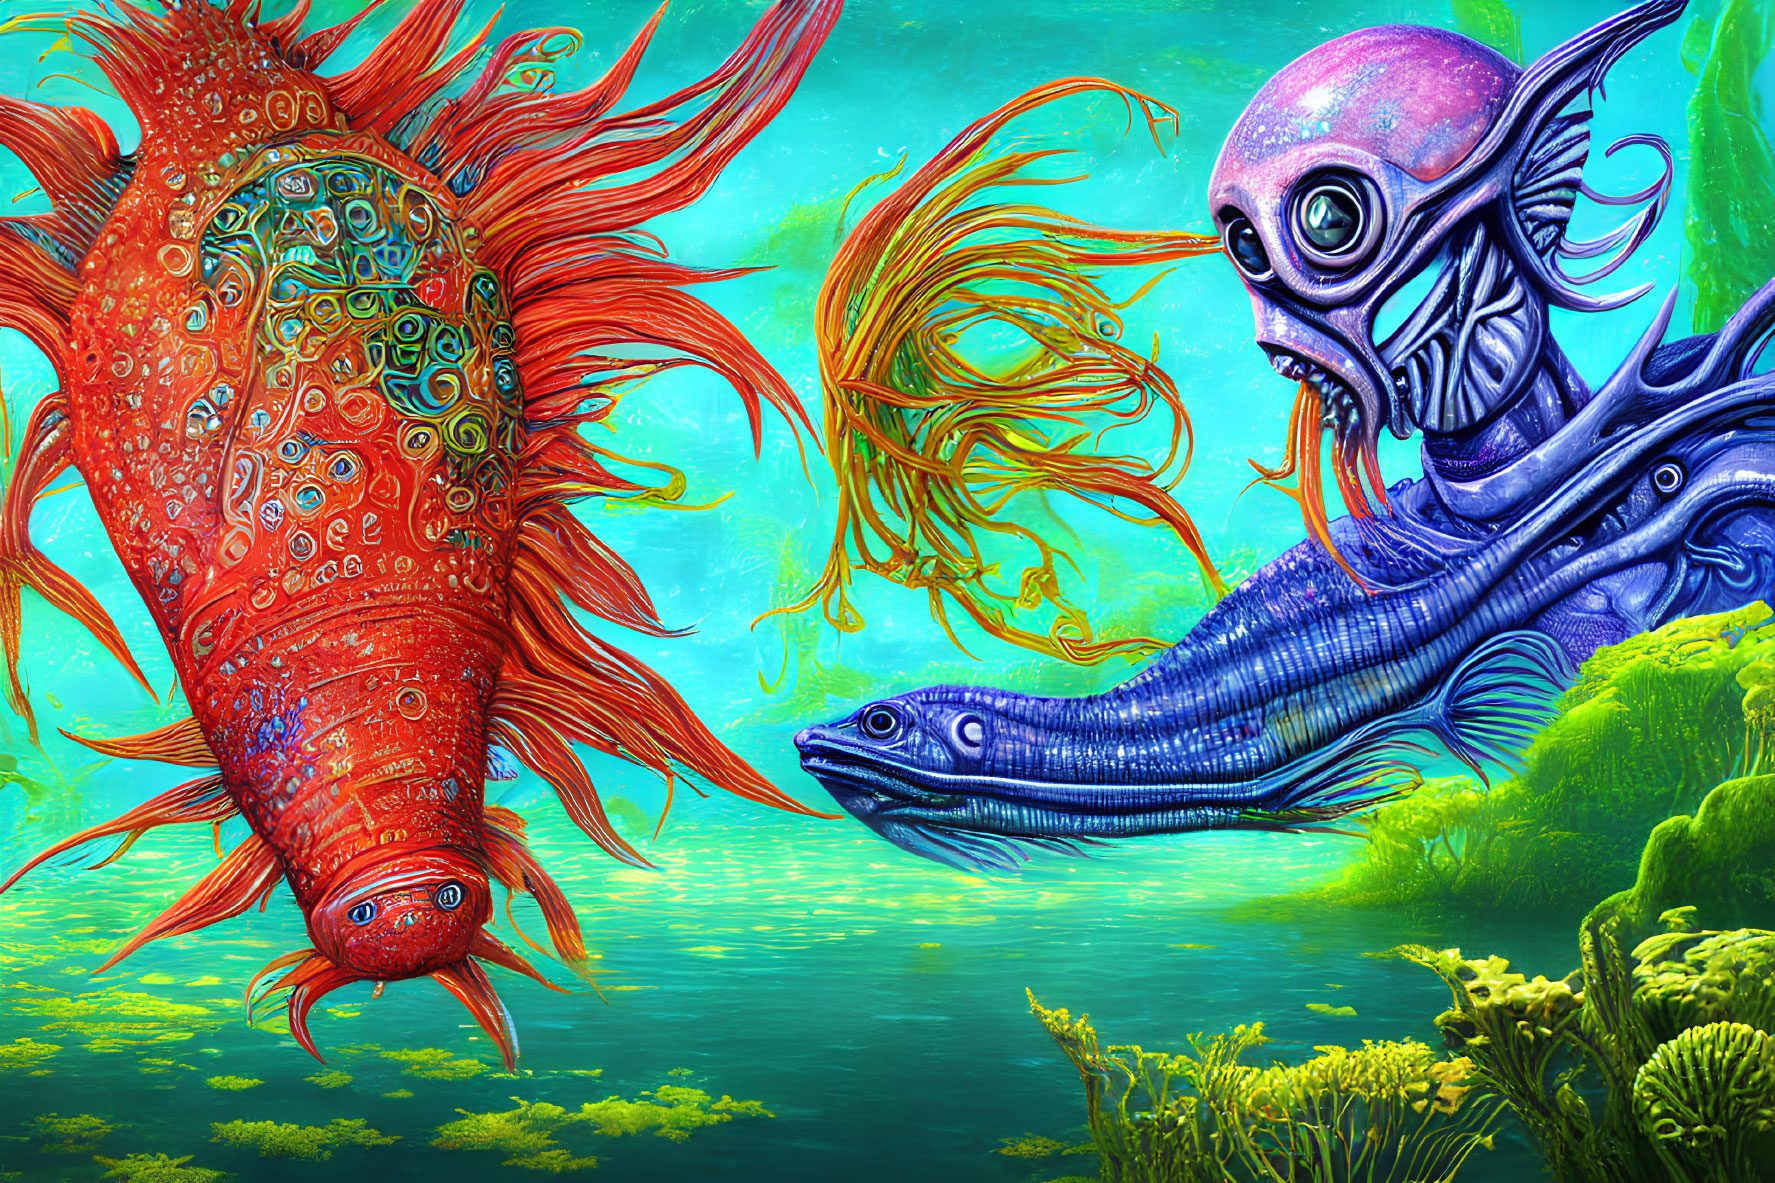 Colorful fish and squid-like creature in vibrant underwater scene